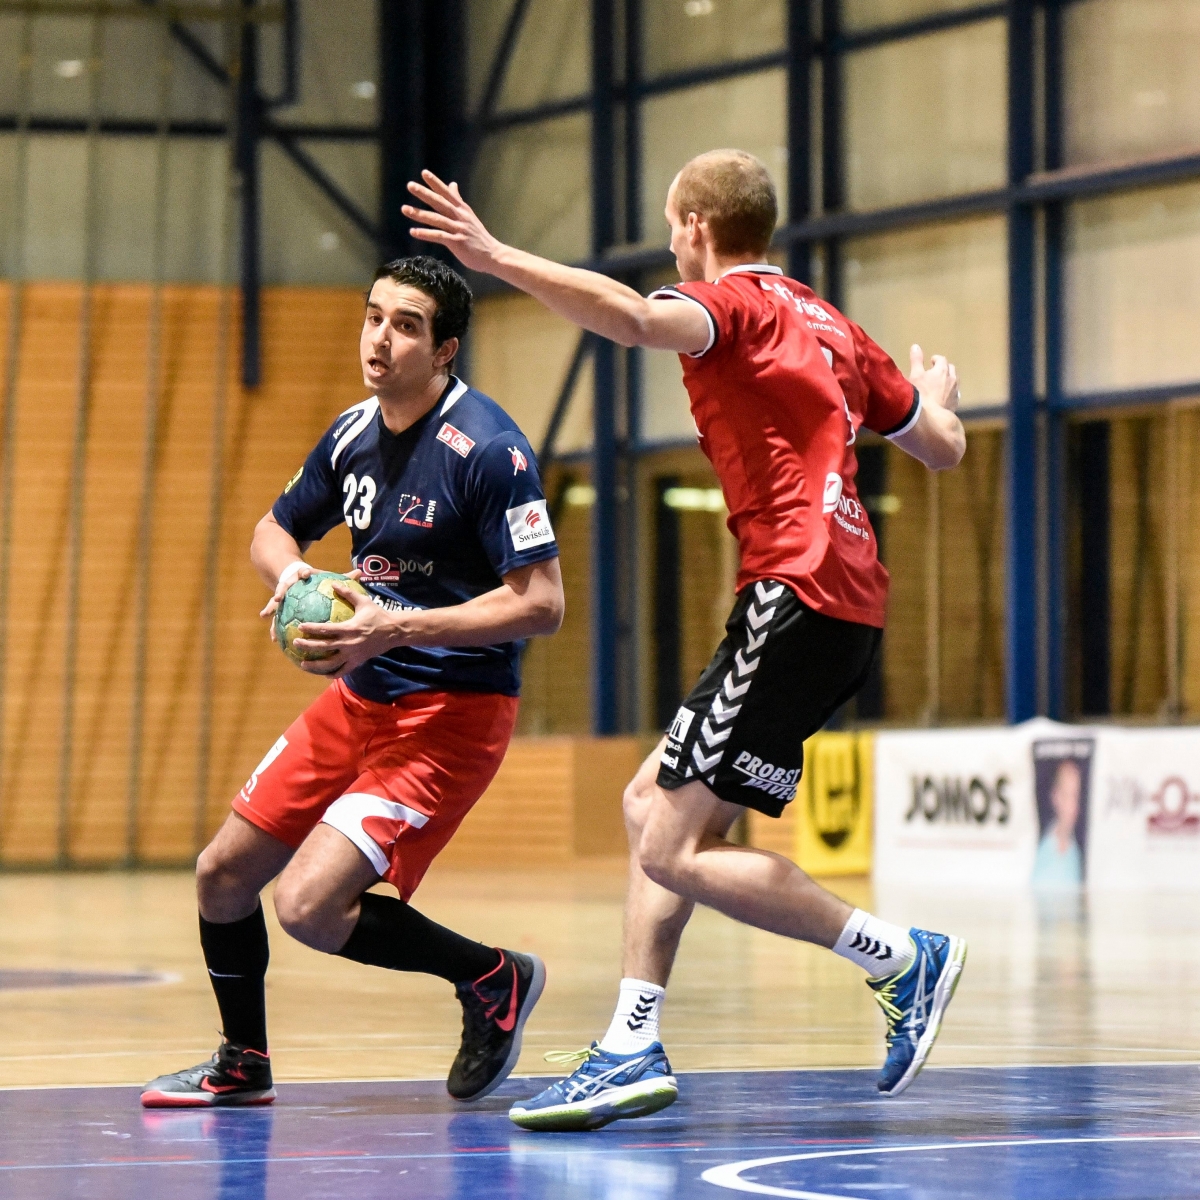 Nyon, dimanche 13.12.2015, Rocher, handball, 1ère ligue, HBC Nyon vs Lyss, Amin Jmal Mohamed, photos Cédric Sandoz